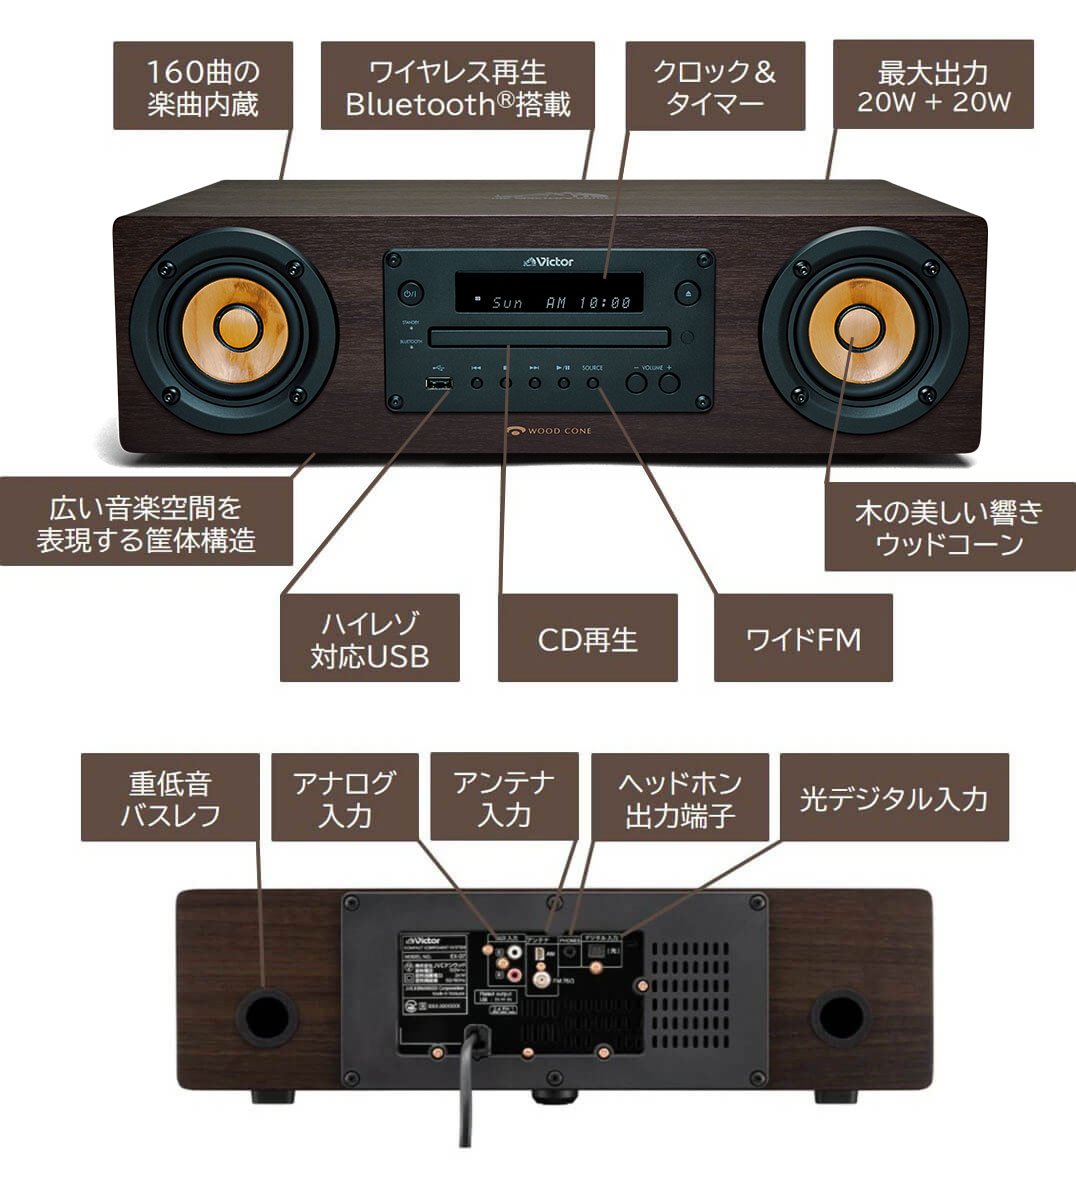 Victor EX-D6 ウッドコーンシリーズ 一体型オールインワンシステム ハイレゾ音源再生 Bluetooth対応 ミニコンポ、ラジカセ 